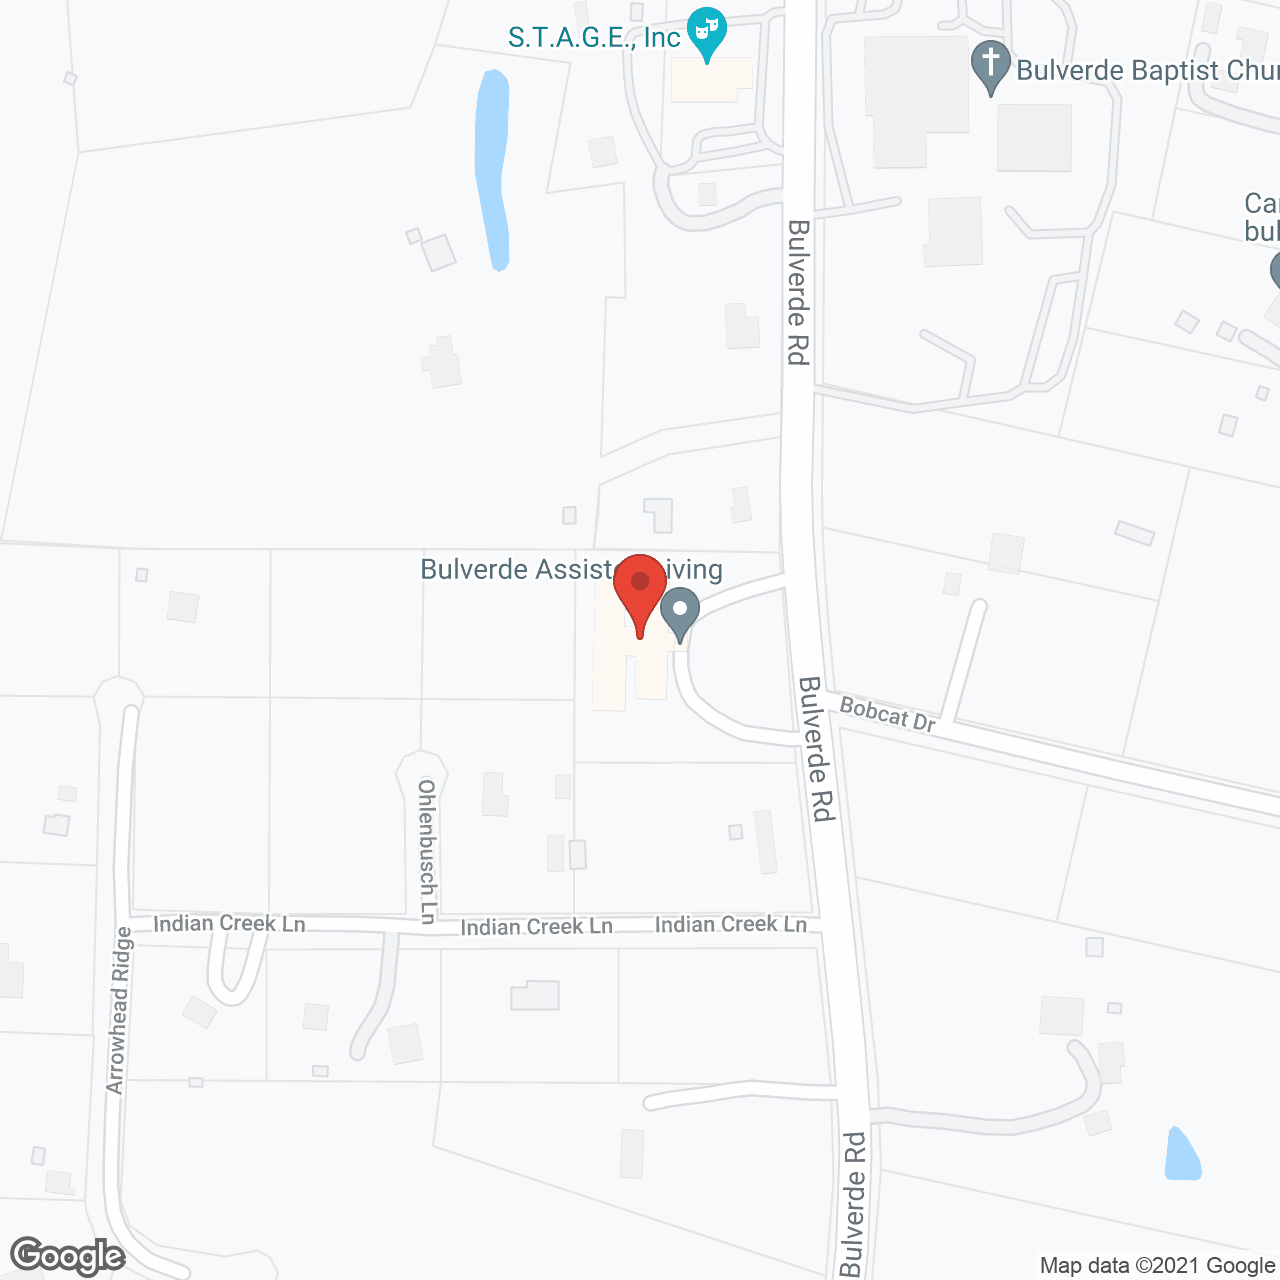 Gemstone at Bulverde in google map